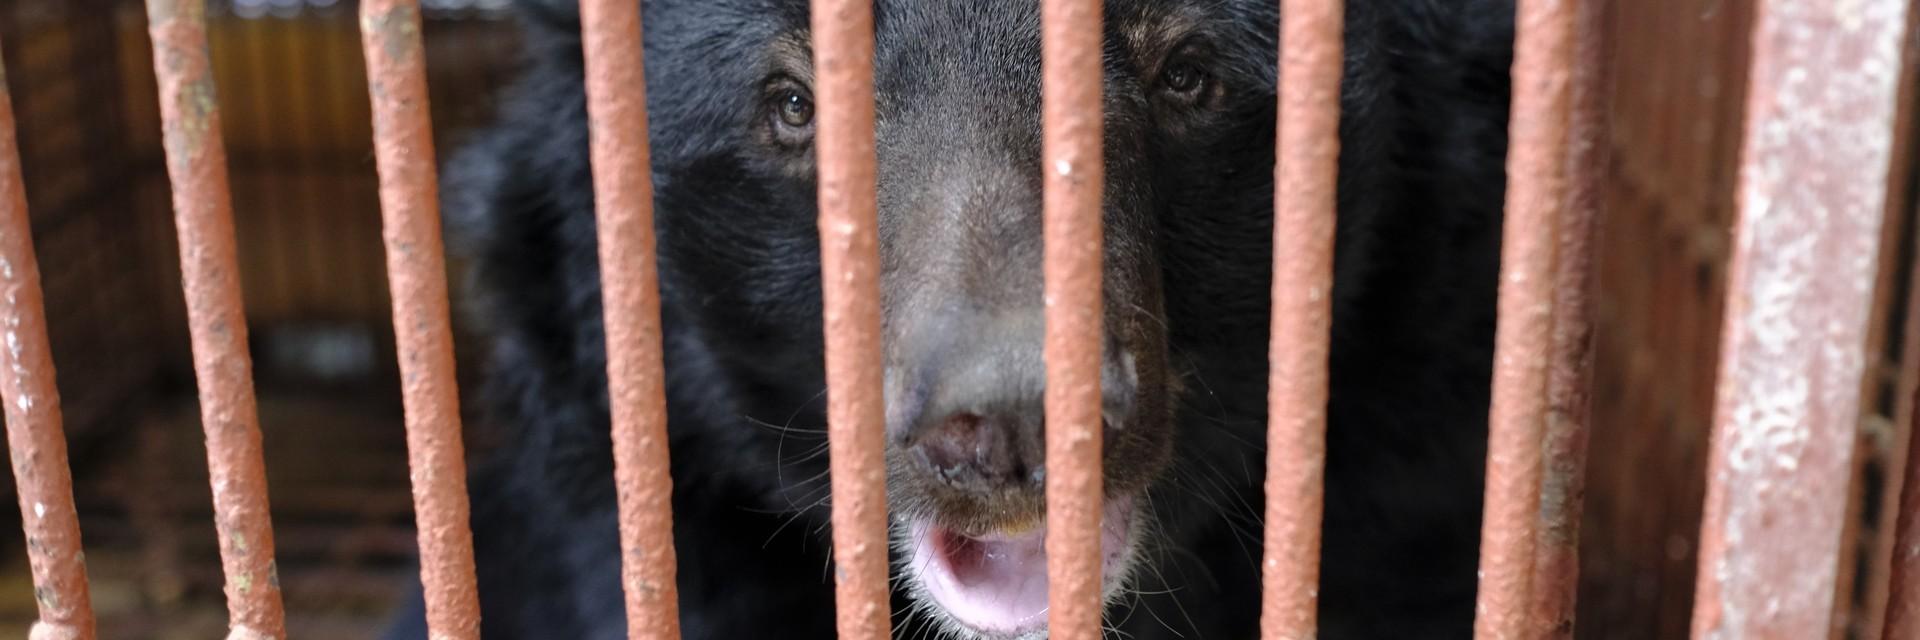 9 bile bears in farm